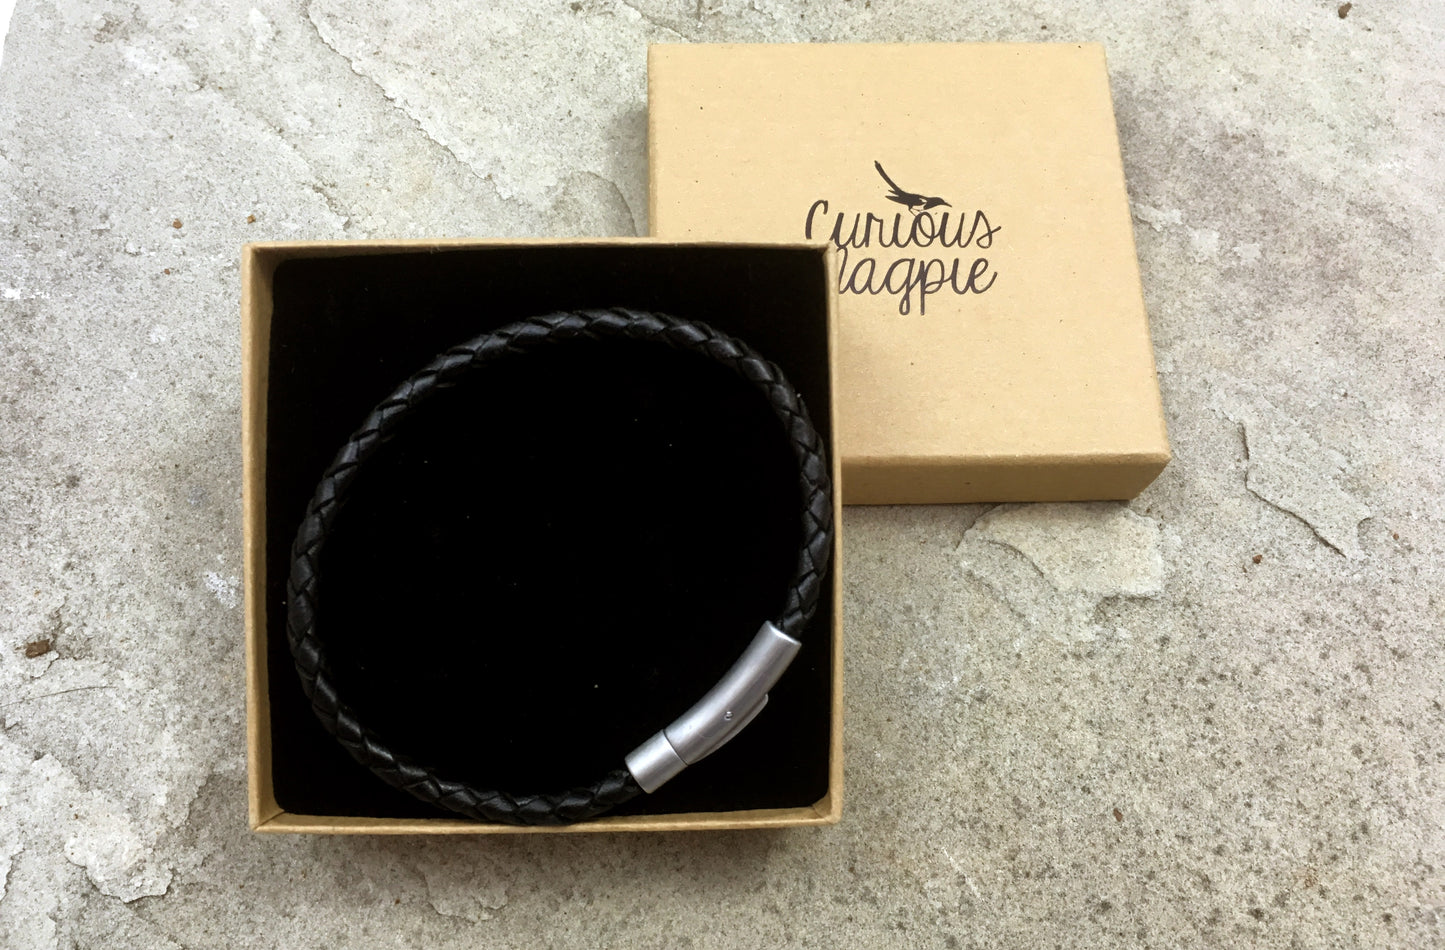 Black Leather Attexo Bracelet